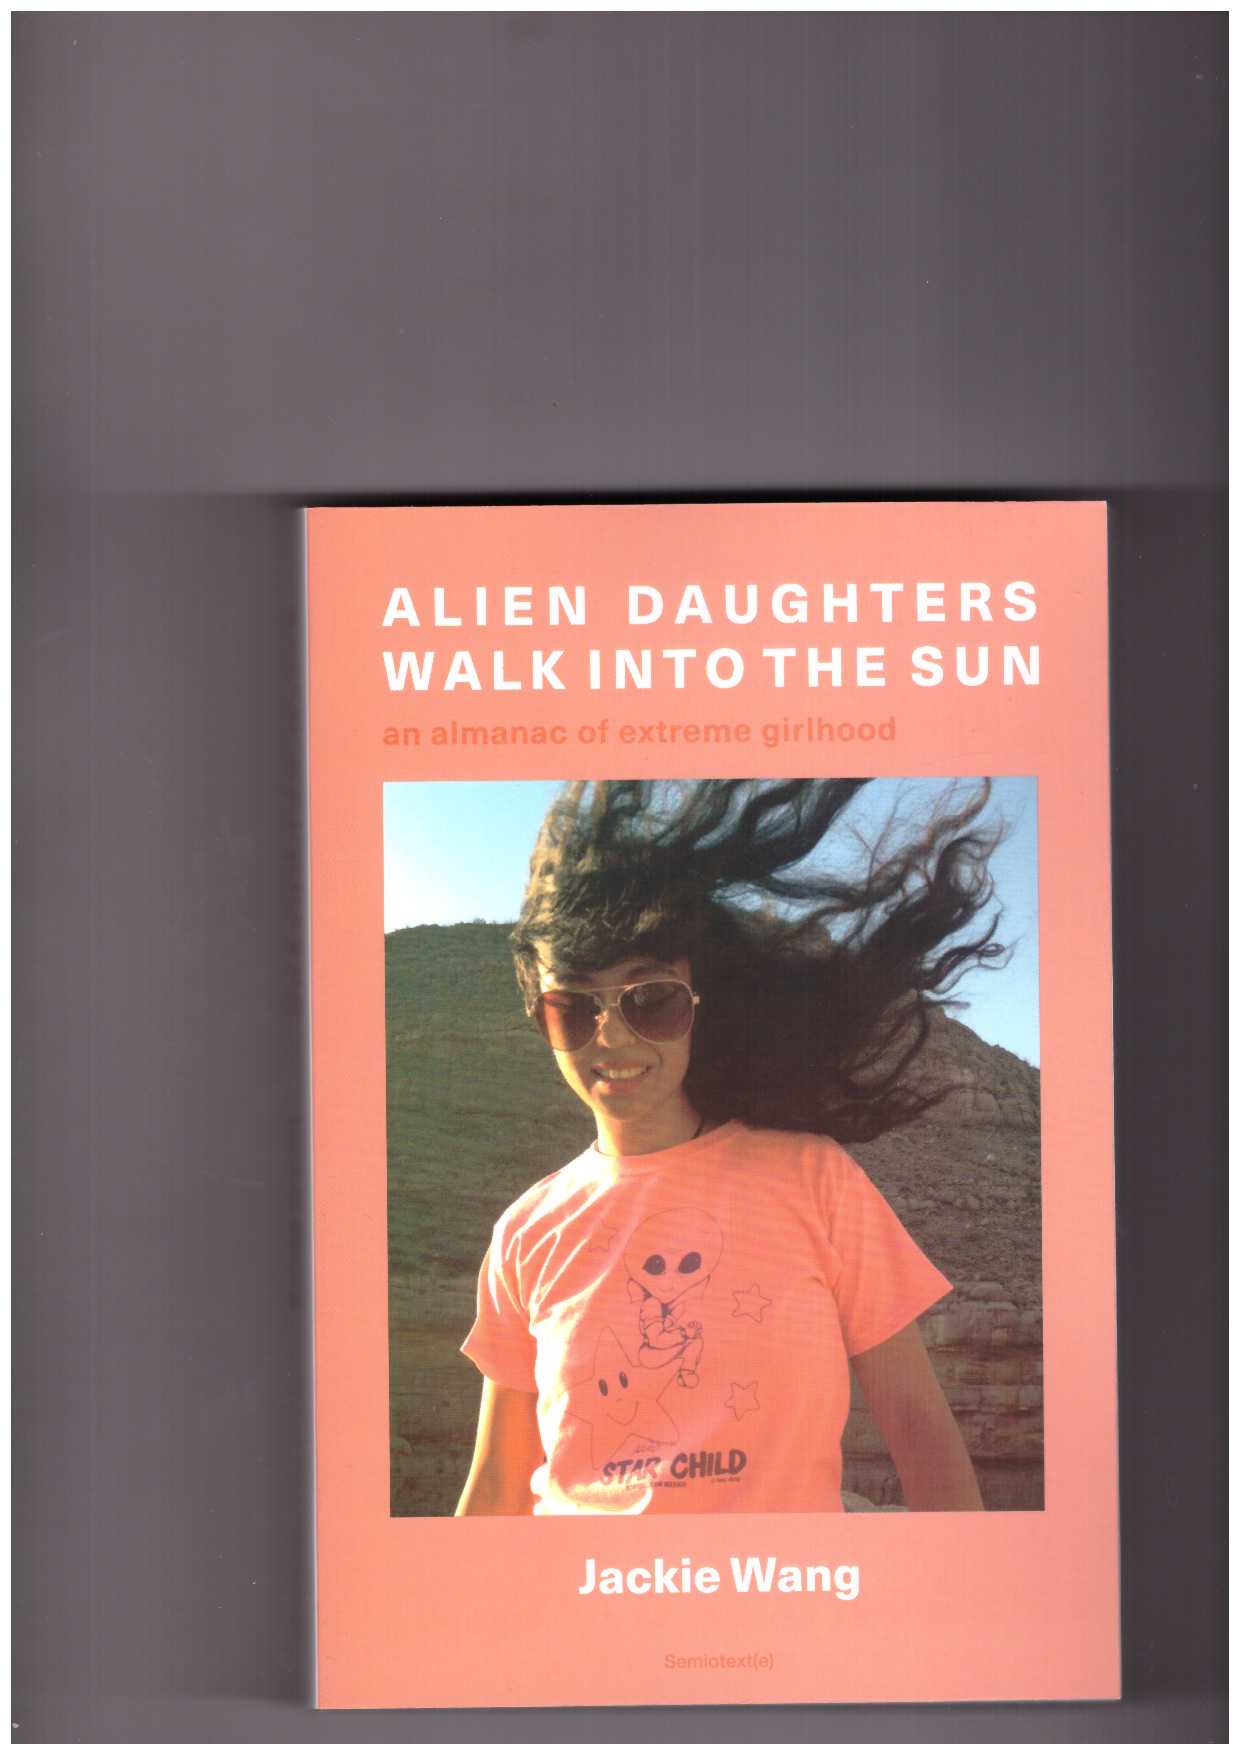 WANG, Jackie - Alien Daughters Walk into the Sun